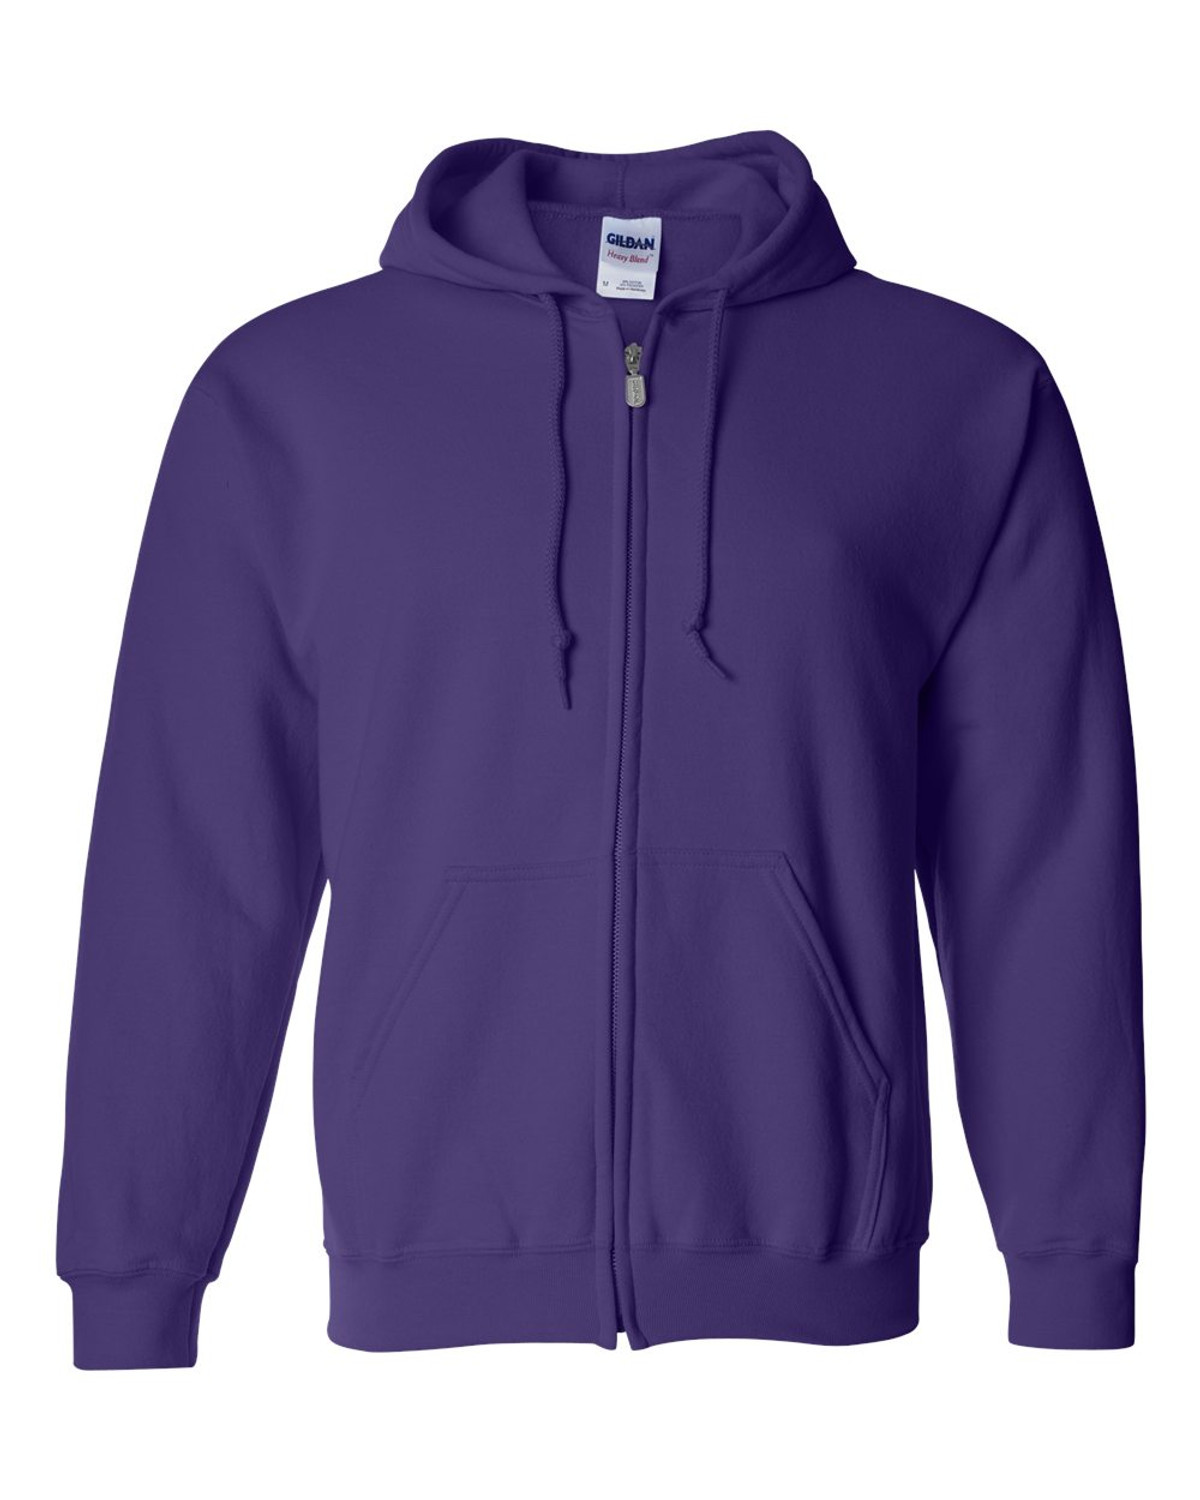 Gildan Unisex Assorted Colors Fleece Sweat Shirts Size xl - at